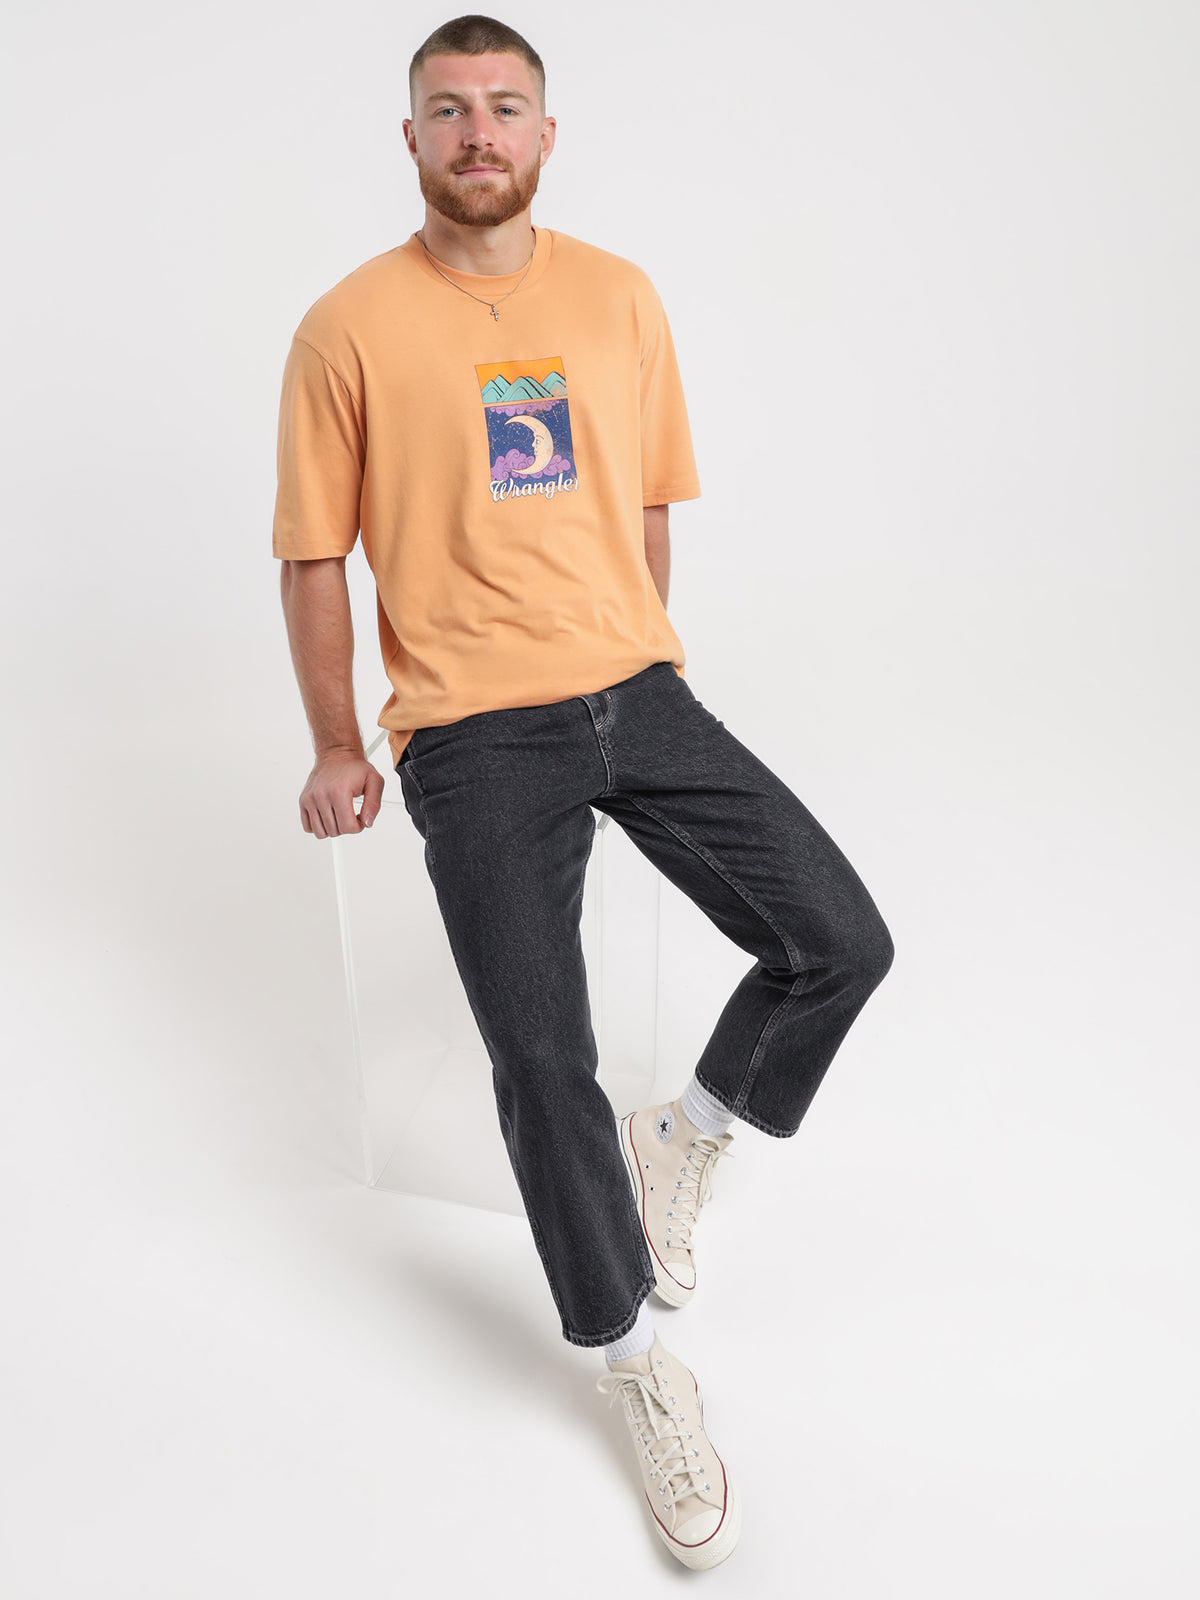 Moon Rising Baggy T-Shirt in Tangerine